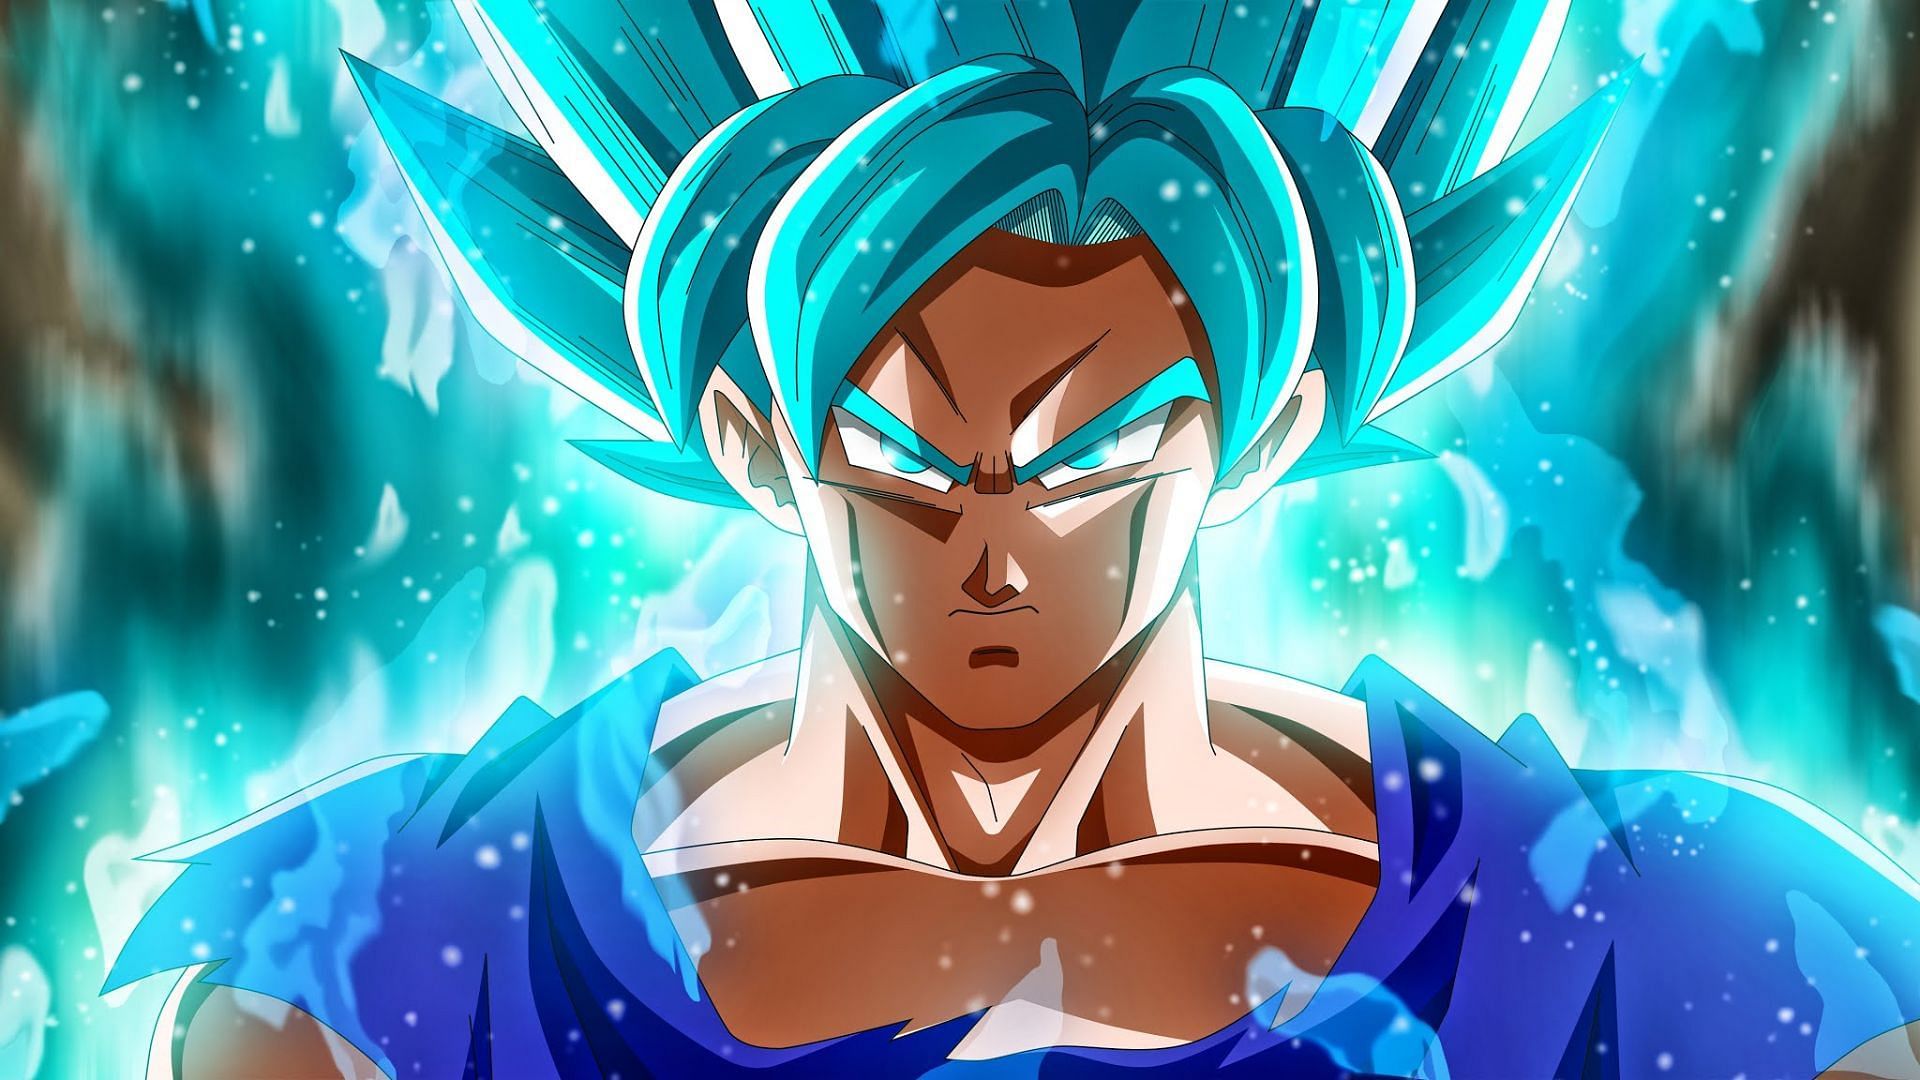 Super Saiyan Blue form of Goku (Image via Toei Animation)